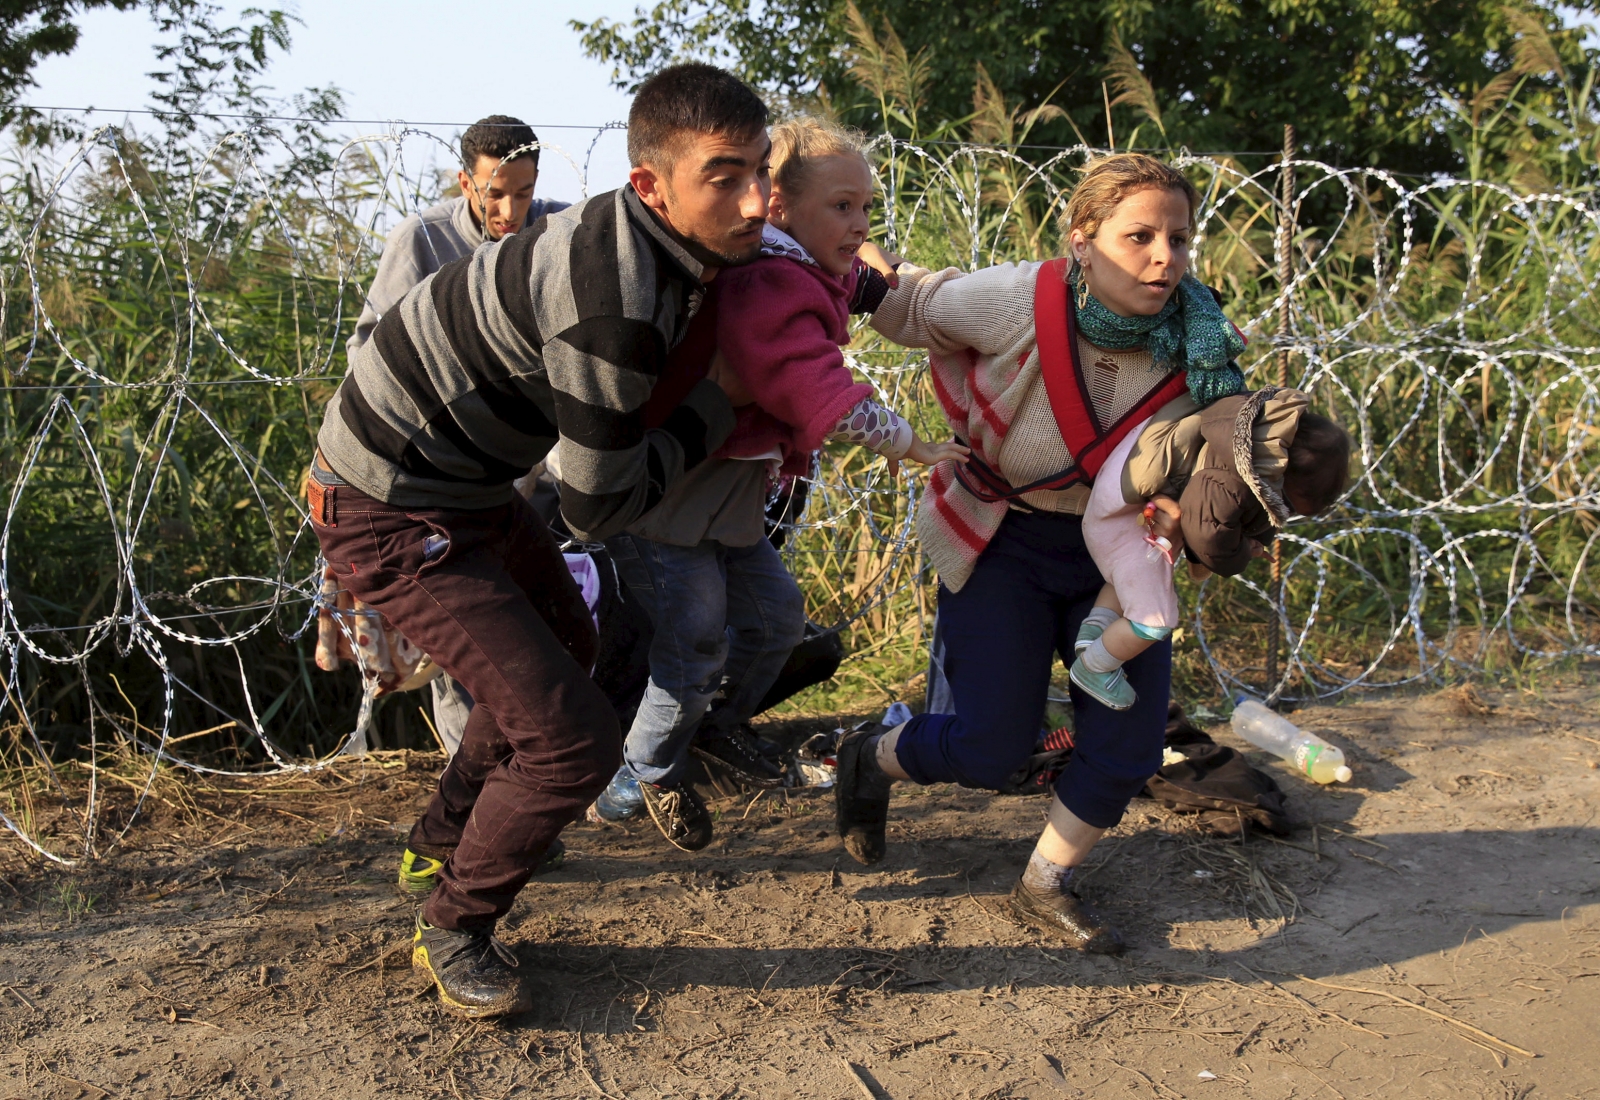 EU migrant crisis 'Collaborative European response, not walls' is only